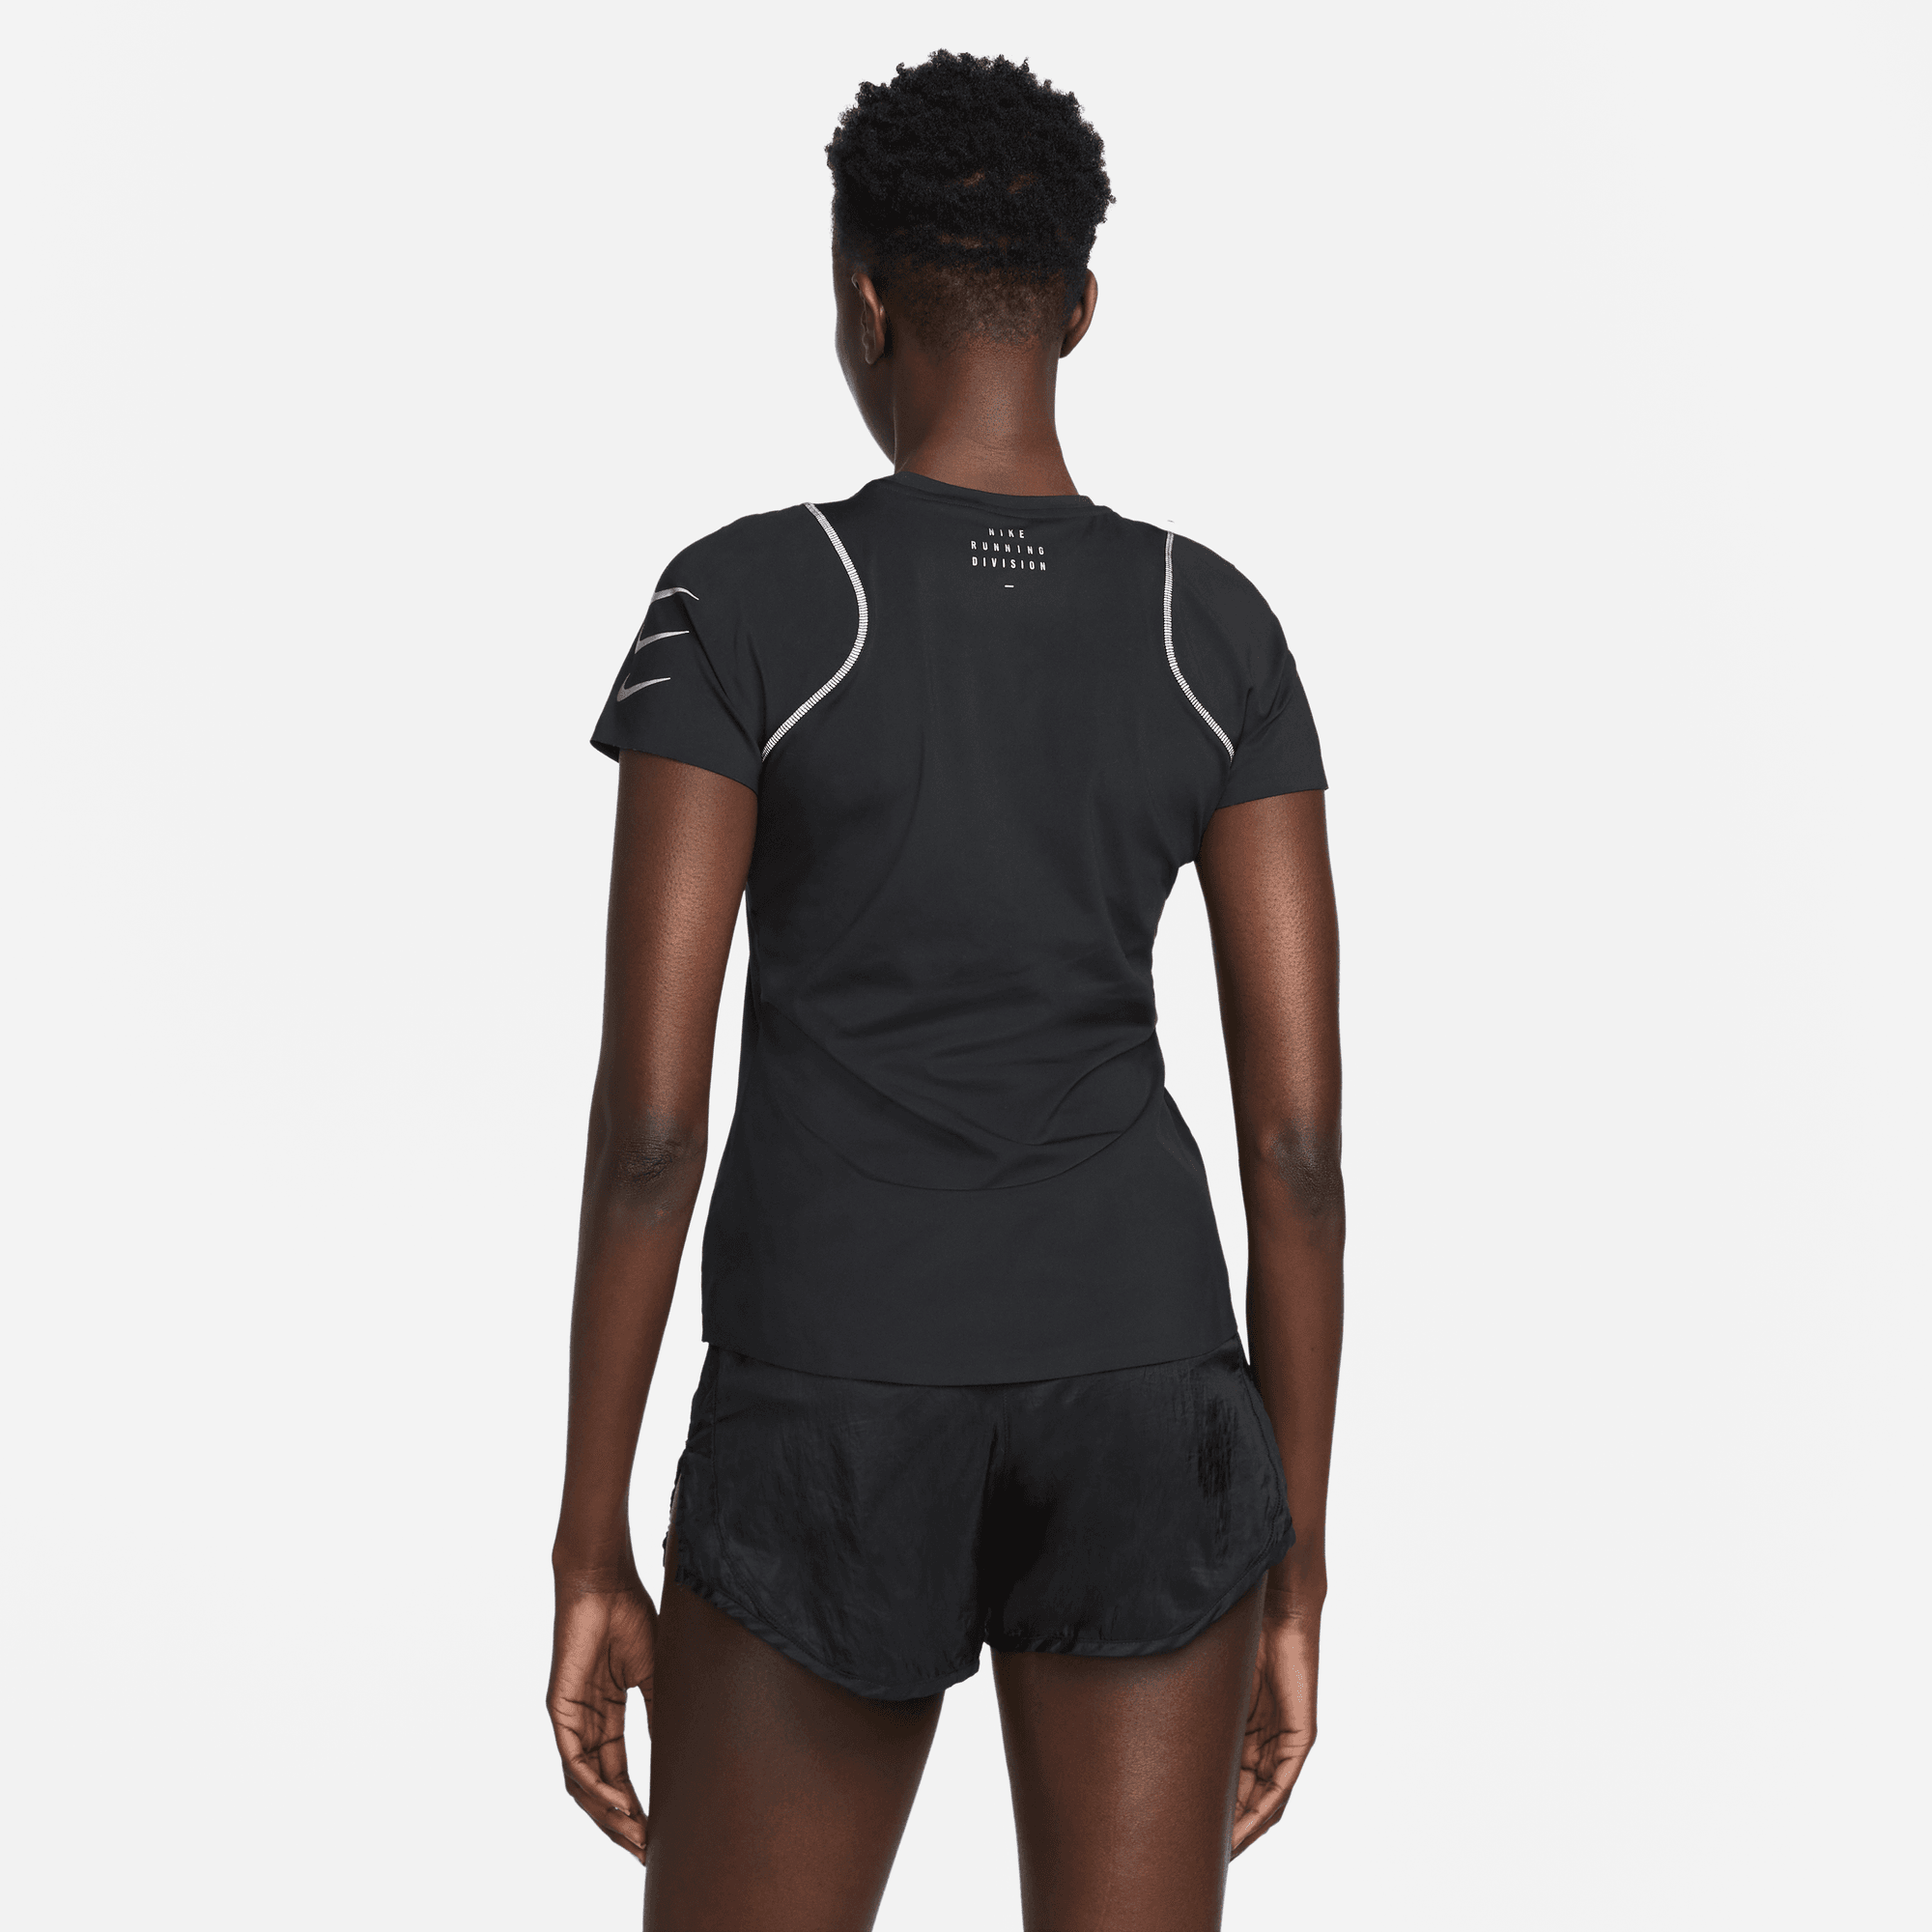 T-shirt Performance Nike Dri Fit Run Division Feminina